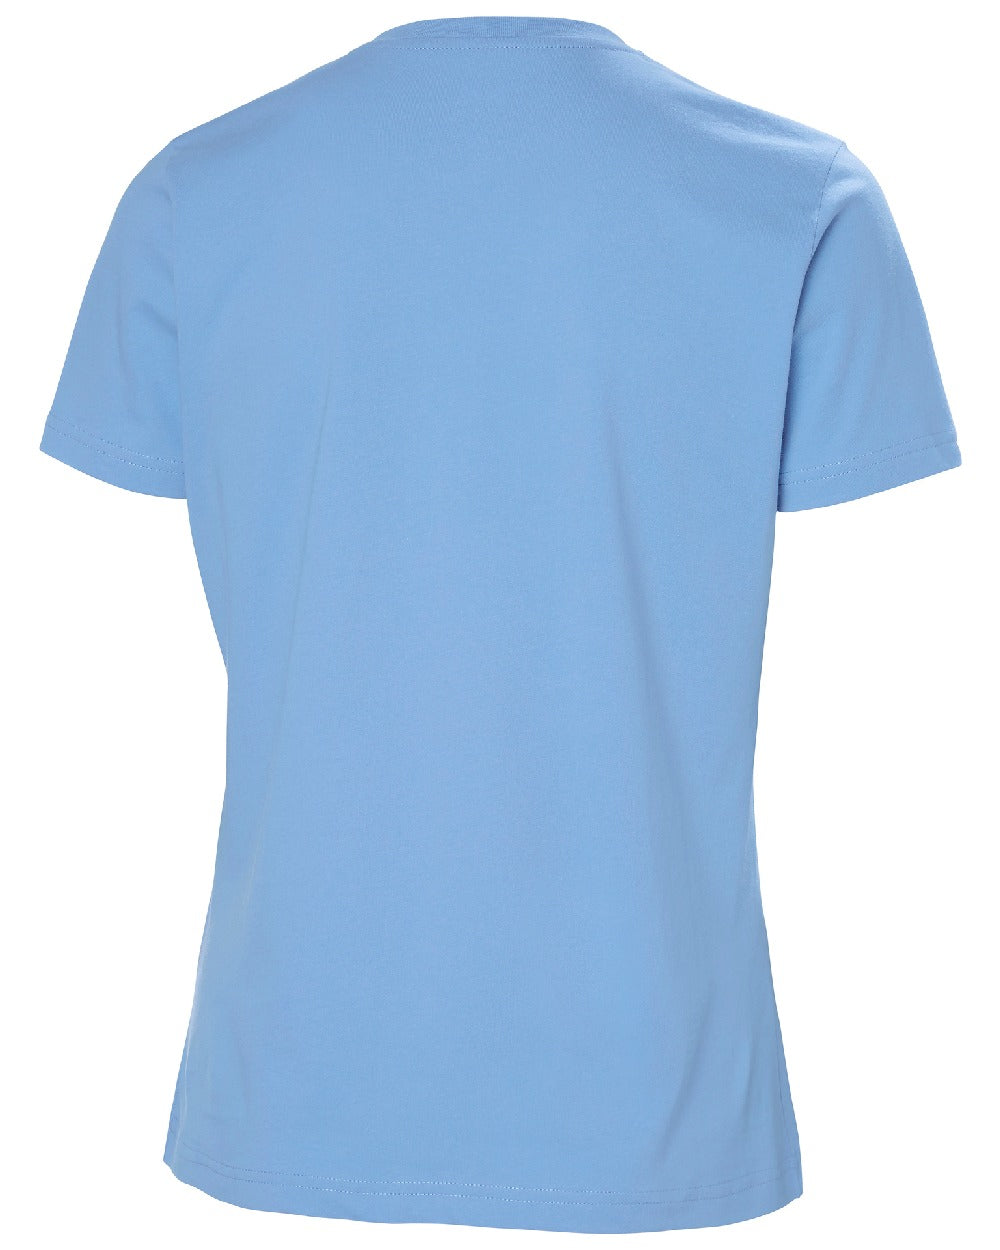 Bright Blue coloured Helly Hansen Womens Logo T-Shirt on white background 